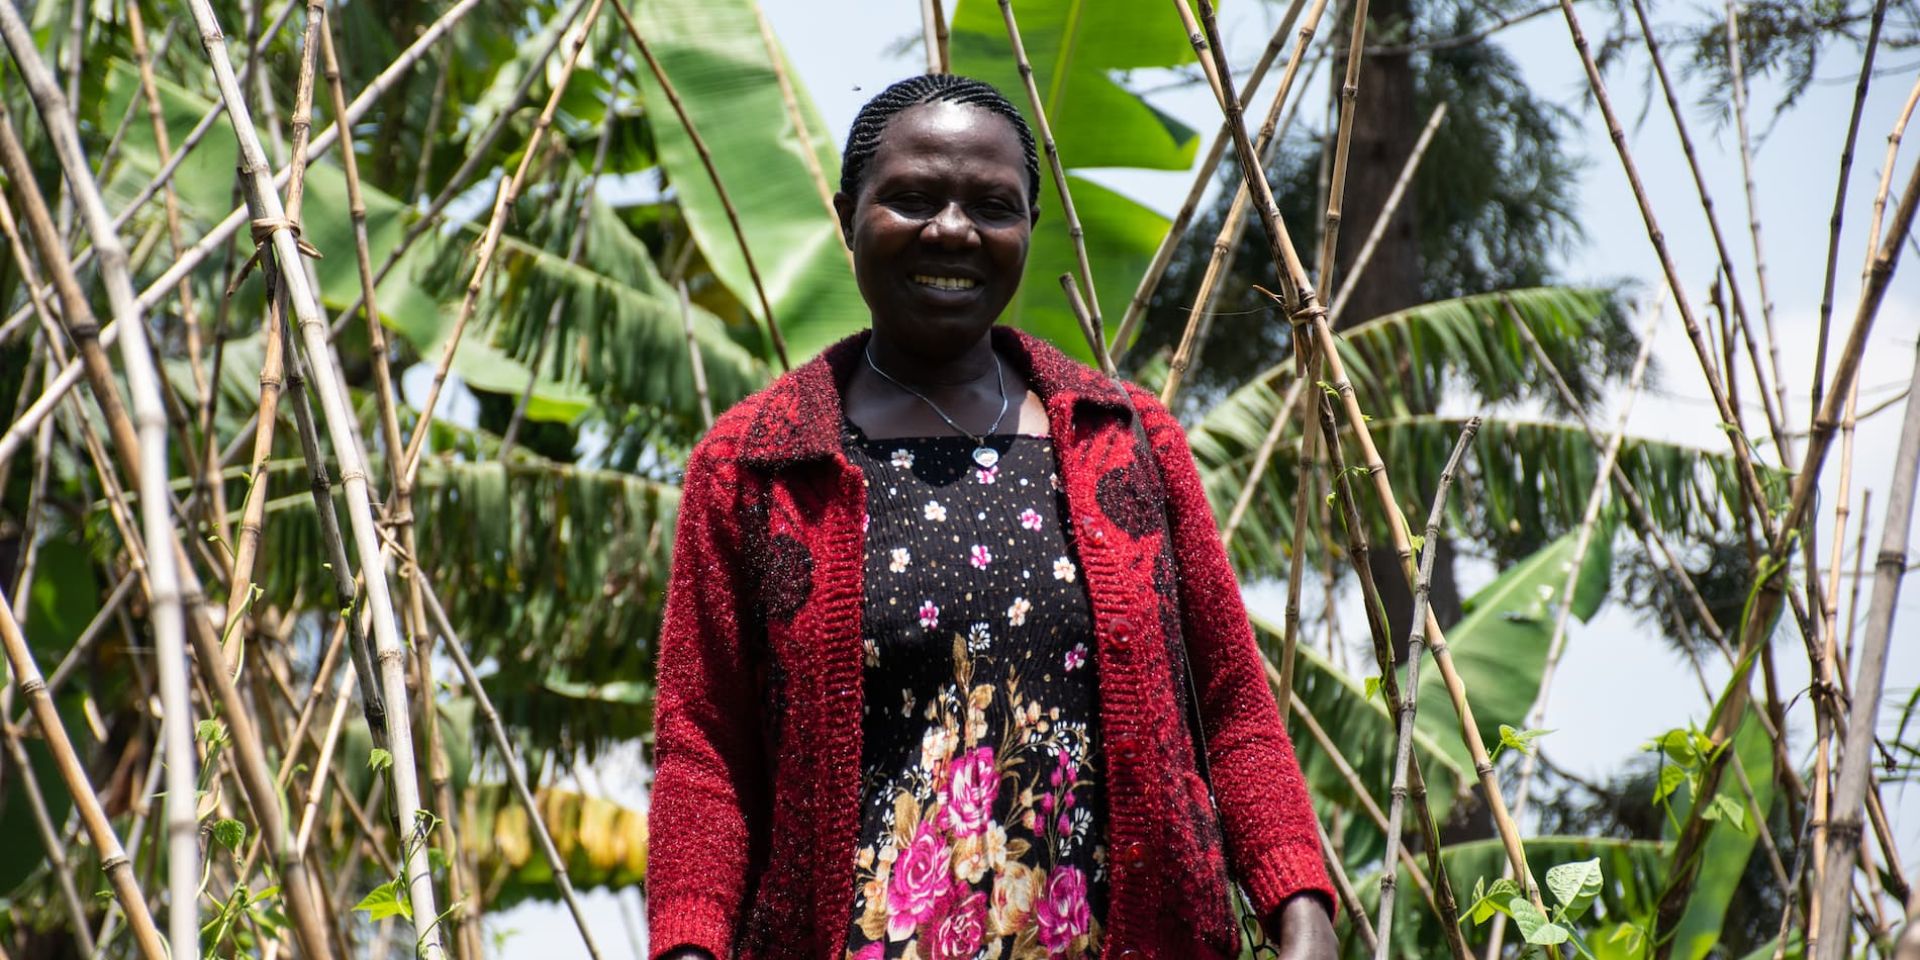  One Acre Fund field officer Alphonsine Nyiransabimana